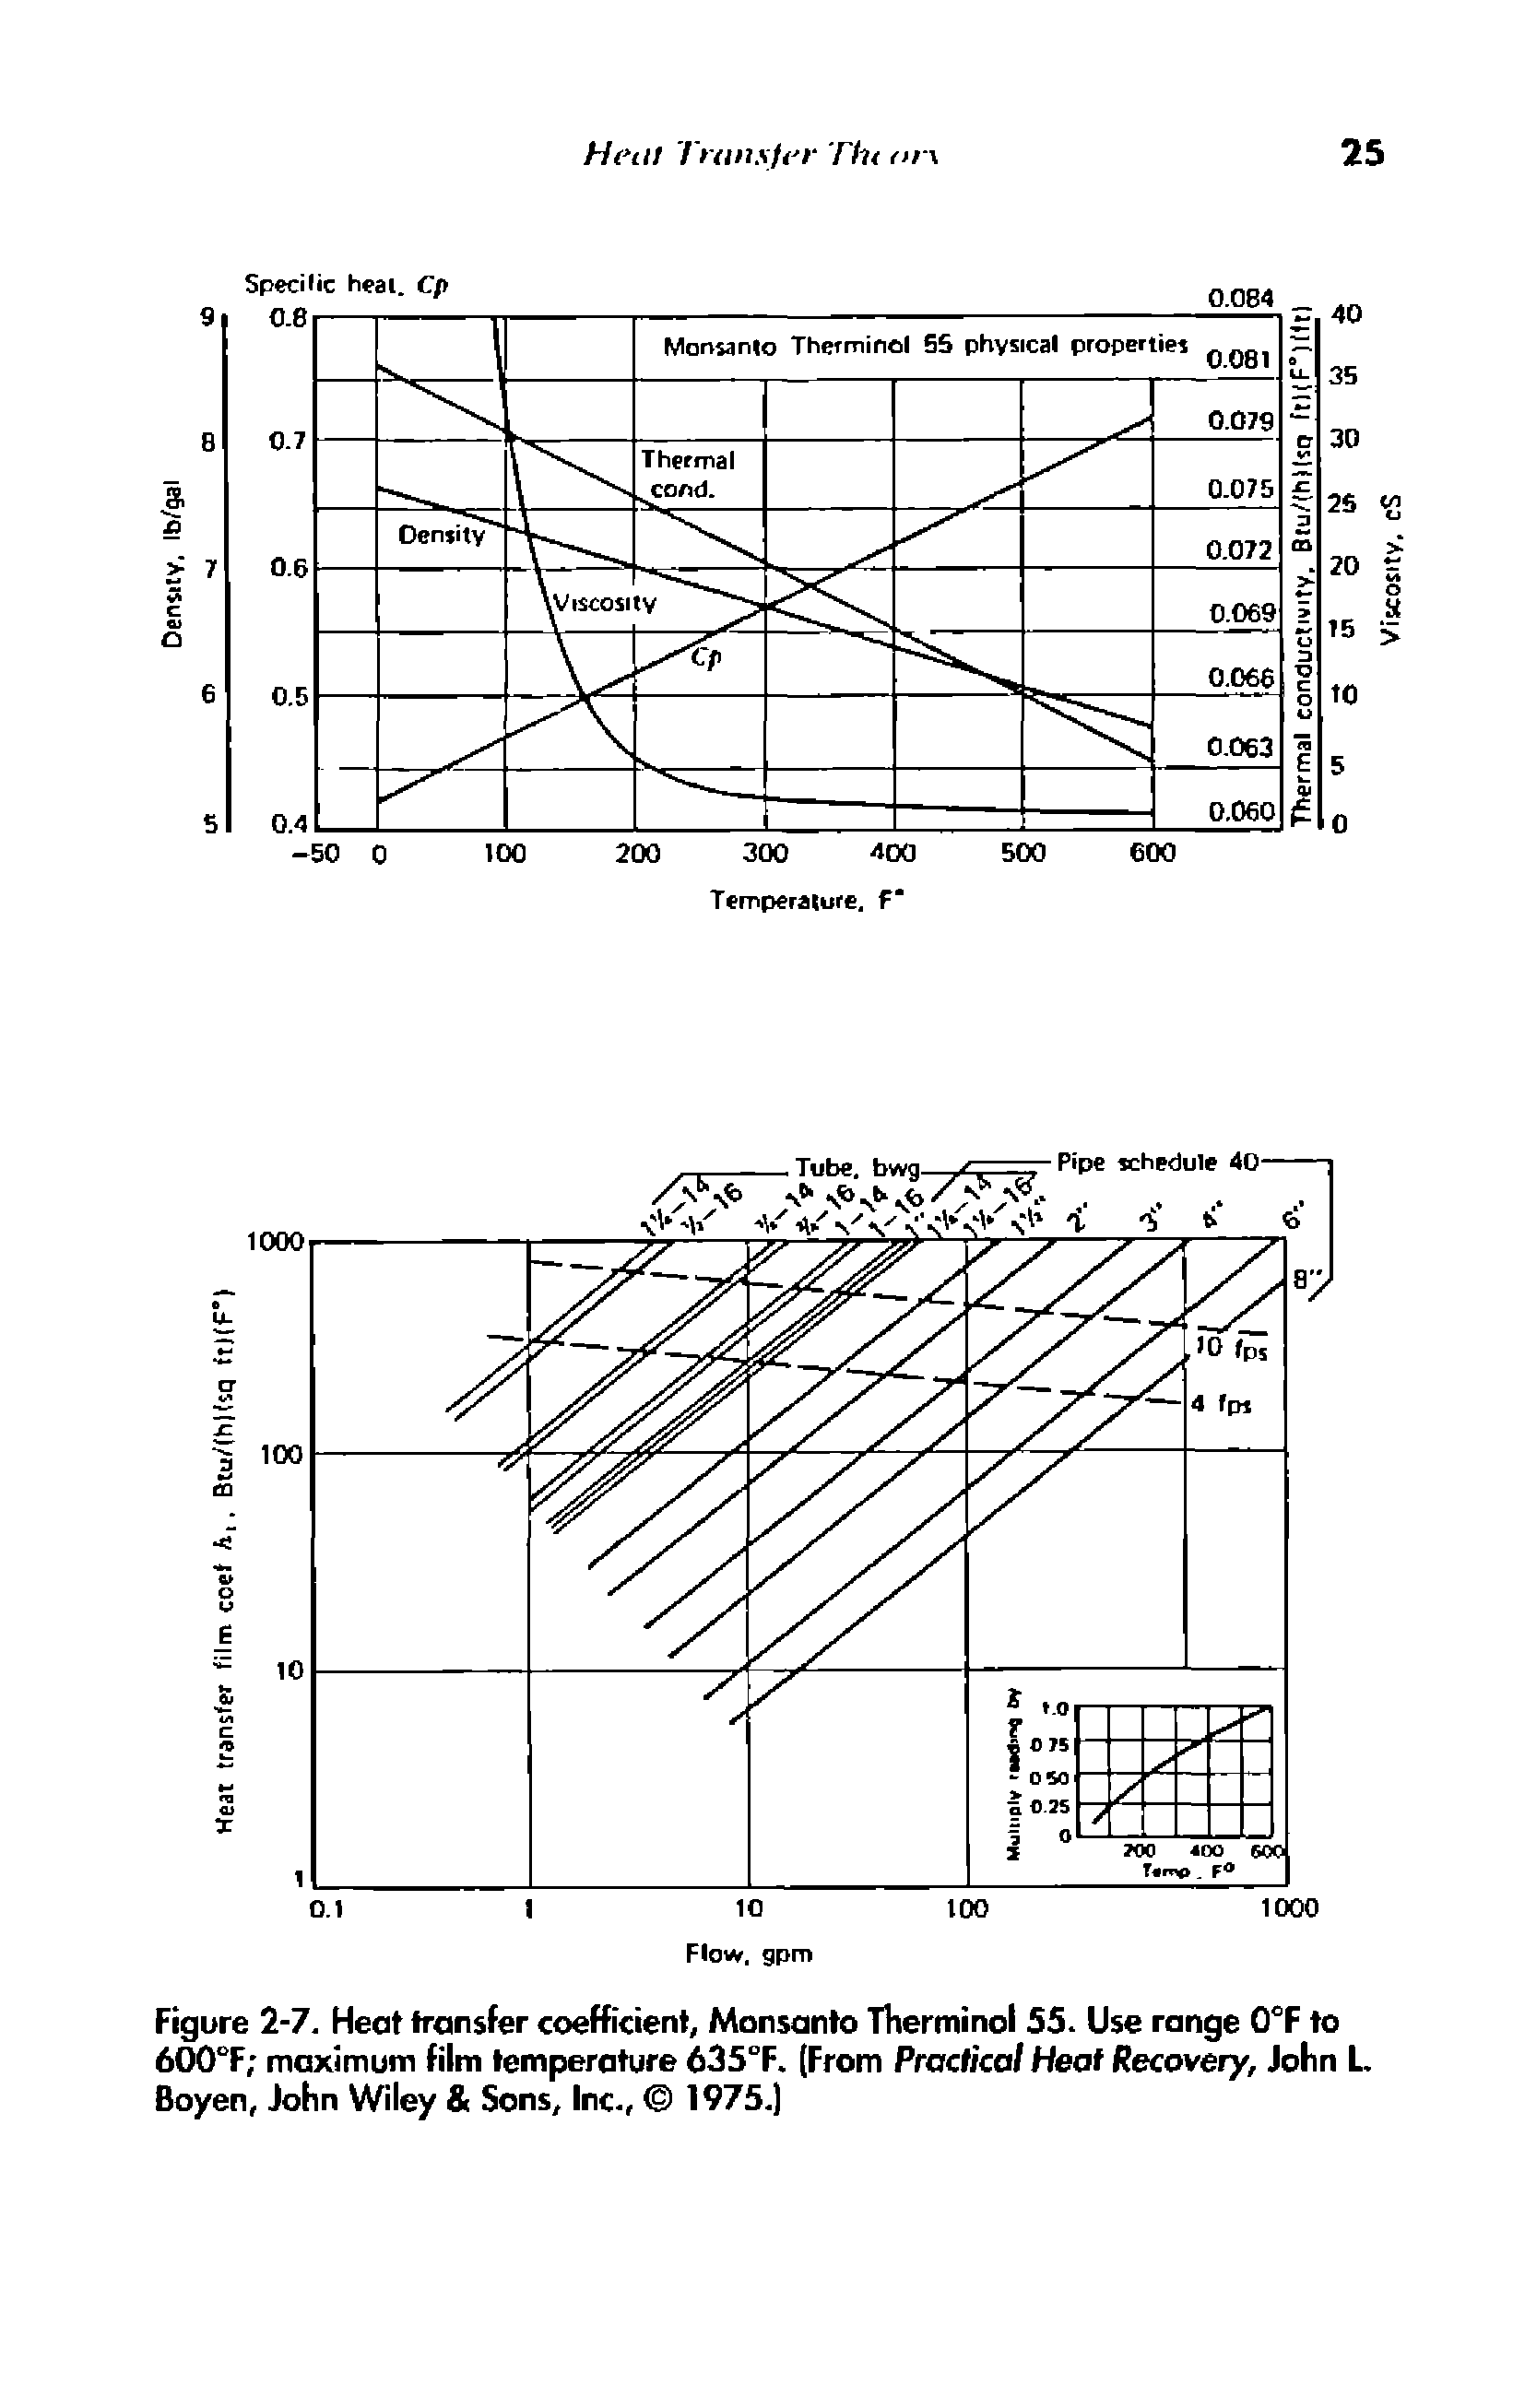 Figure 2-7. Heat transfer coefficient, Monsanto Therminol 55. Use range 0°F to 600°F maximum film temperature 635 F. (From Practical Heat Recovery, John L Boyen, John Wiley Sons, Inc., 1975.)...